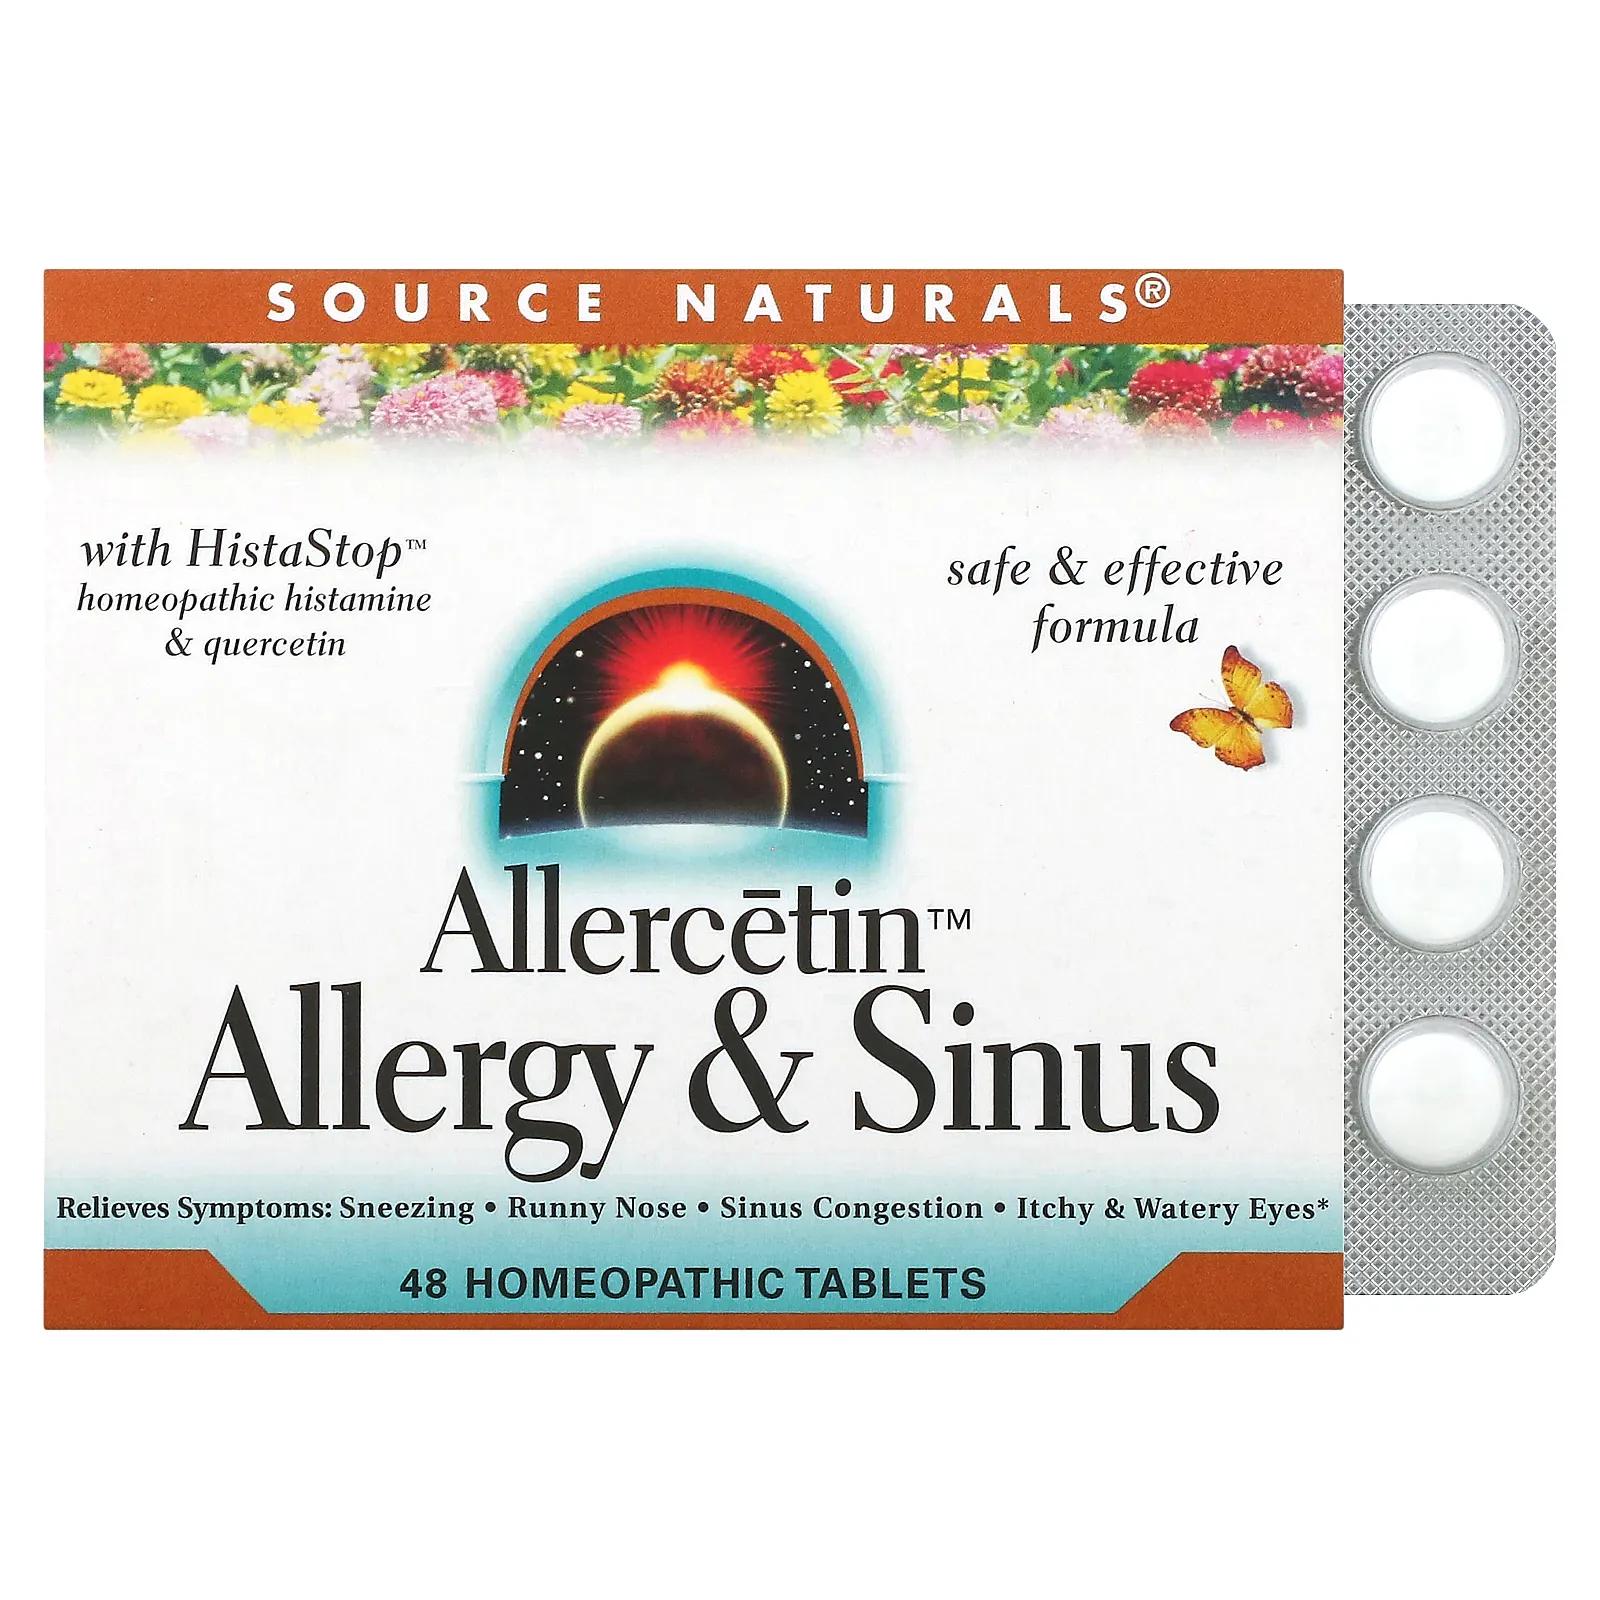 Source Naturals Allercetin Средство от аллергии и заложенности носа 48 гомеопатических таблеток фотографии